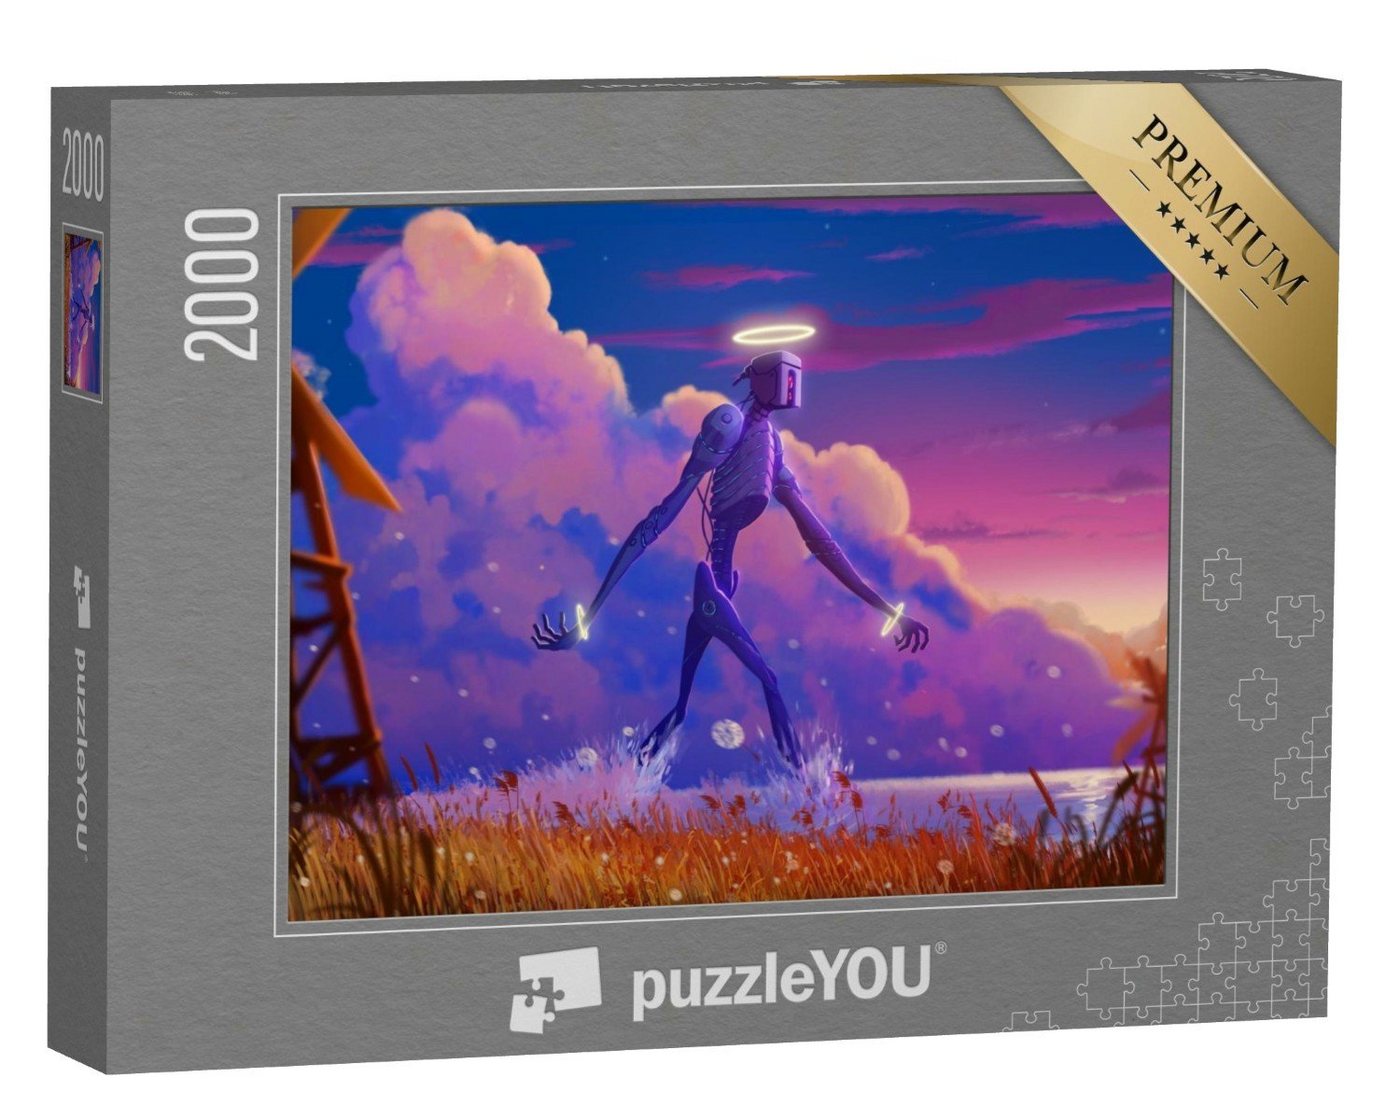 puzzleYOU Puzzle Digitale Kunst: The Giant Mystery Robot Walking, 2000 Puzzleteile, puzzleYOU-Kollektionen Illustrationen von puzzleYOU